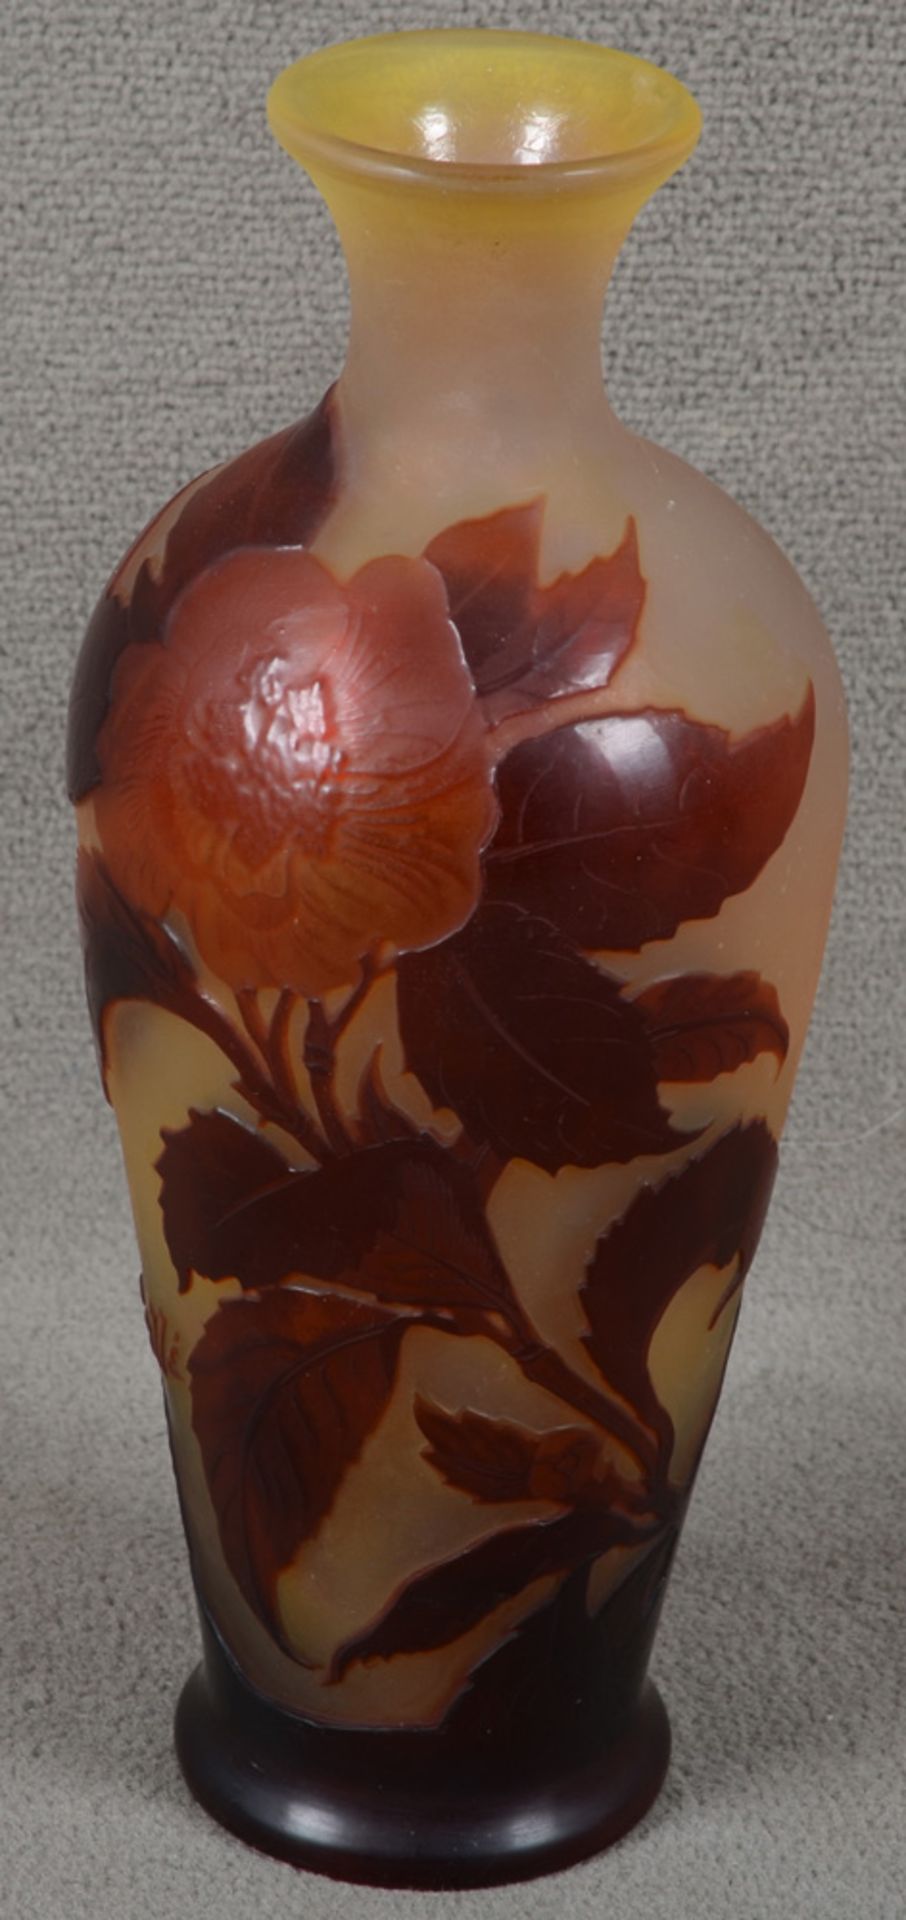 Jugendstil-Vase. Émile Gallé, Nancy um 1900. Farbloses Glas, farbig überfangen, geschnitten mit